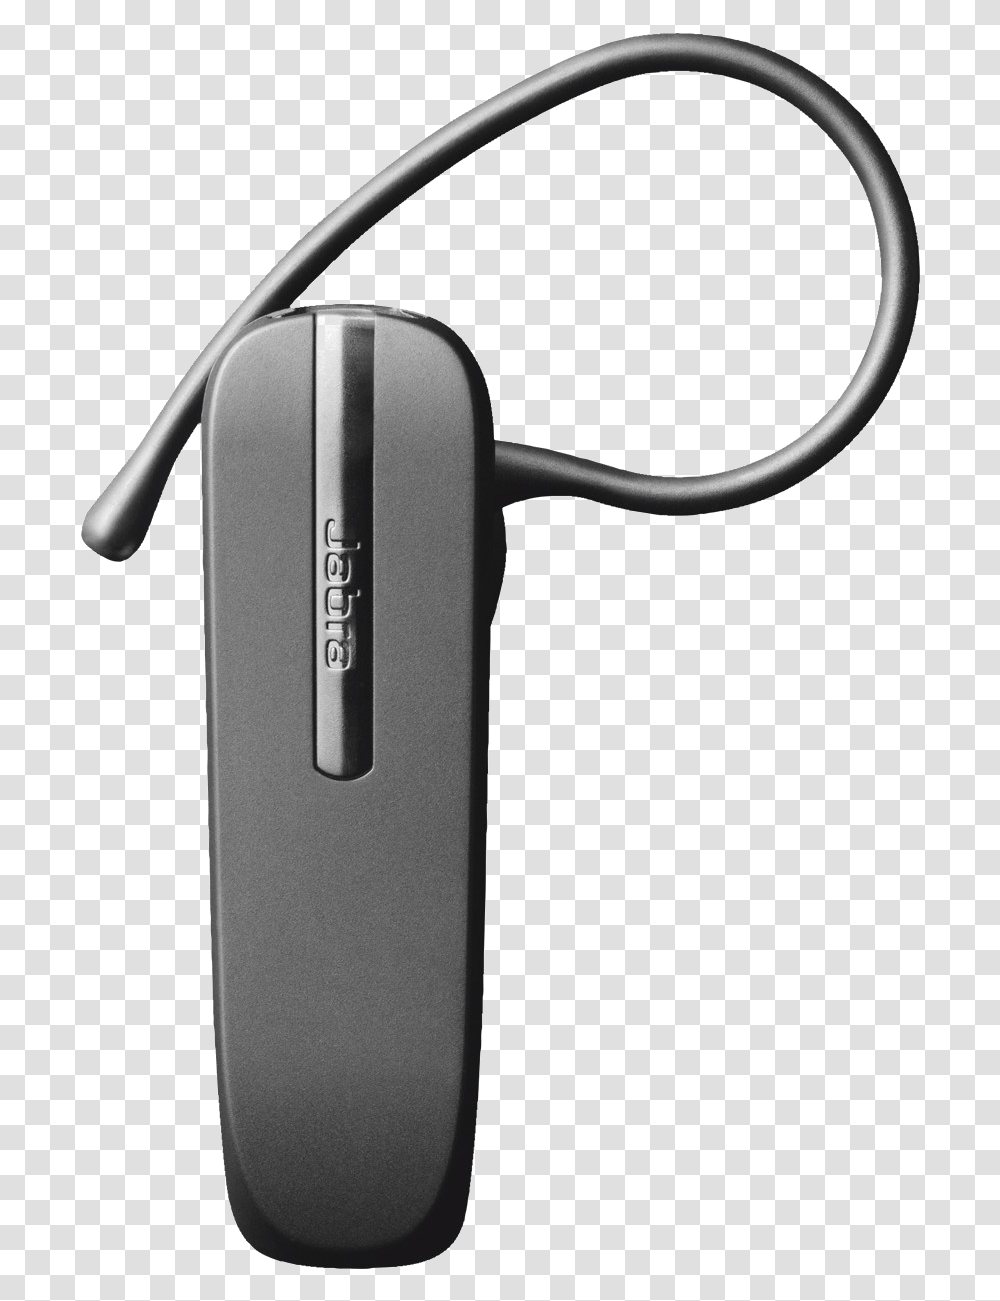 Bluetooth Image Jabra Bt2047 Bluetooth Headset, Adapter, Electronics, Hardware, Modem Transparent Png